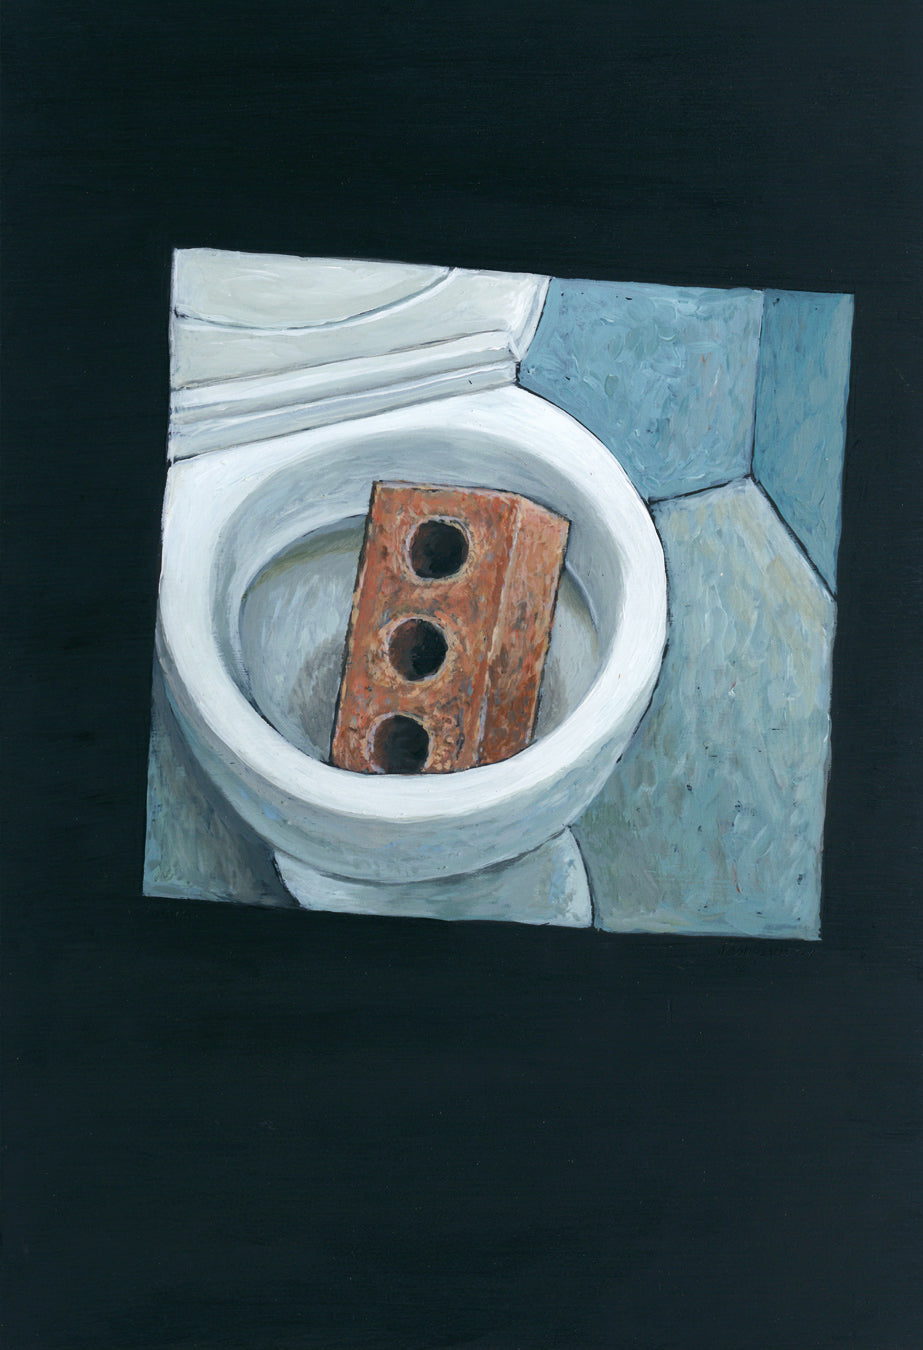 Brick in Toilet